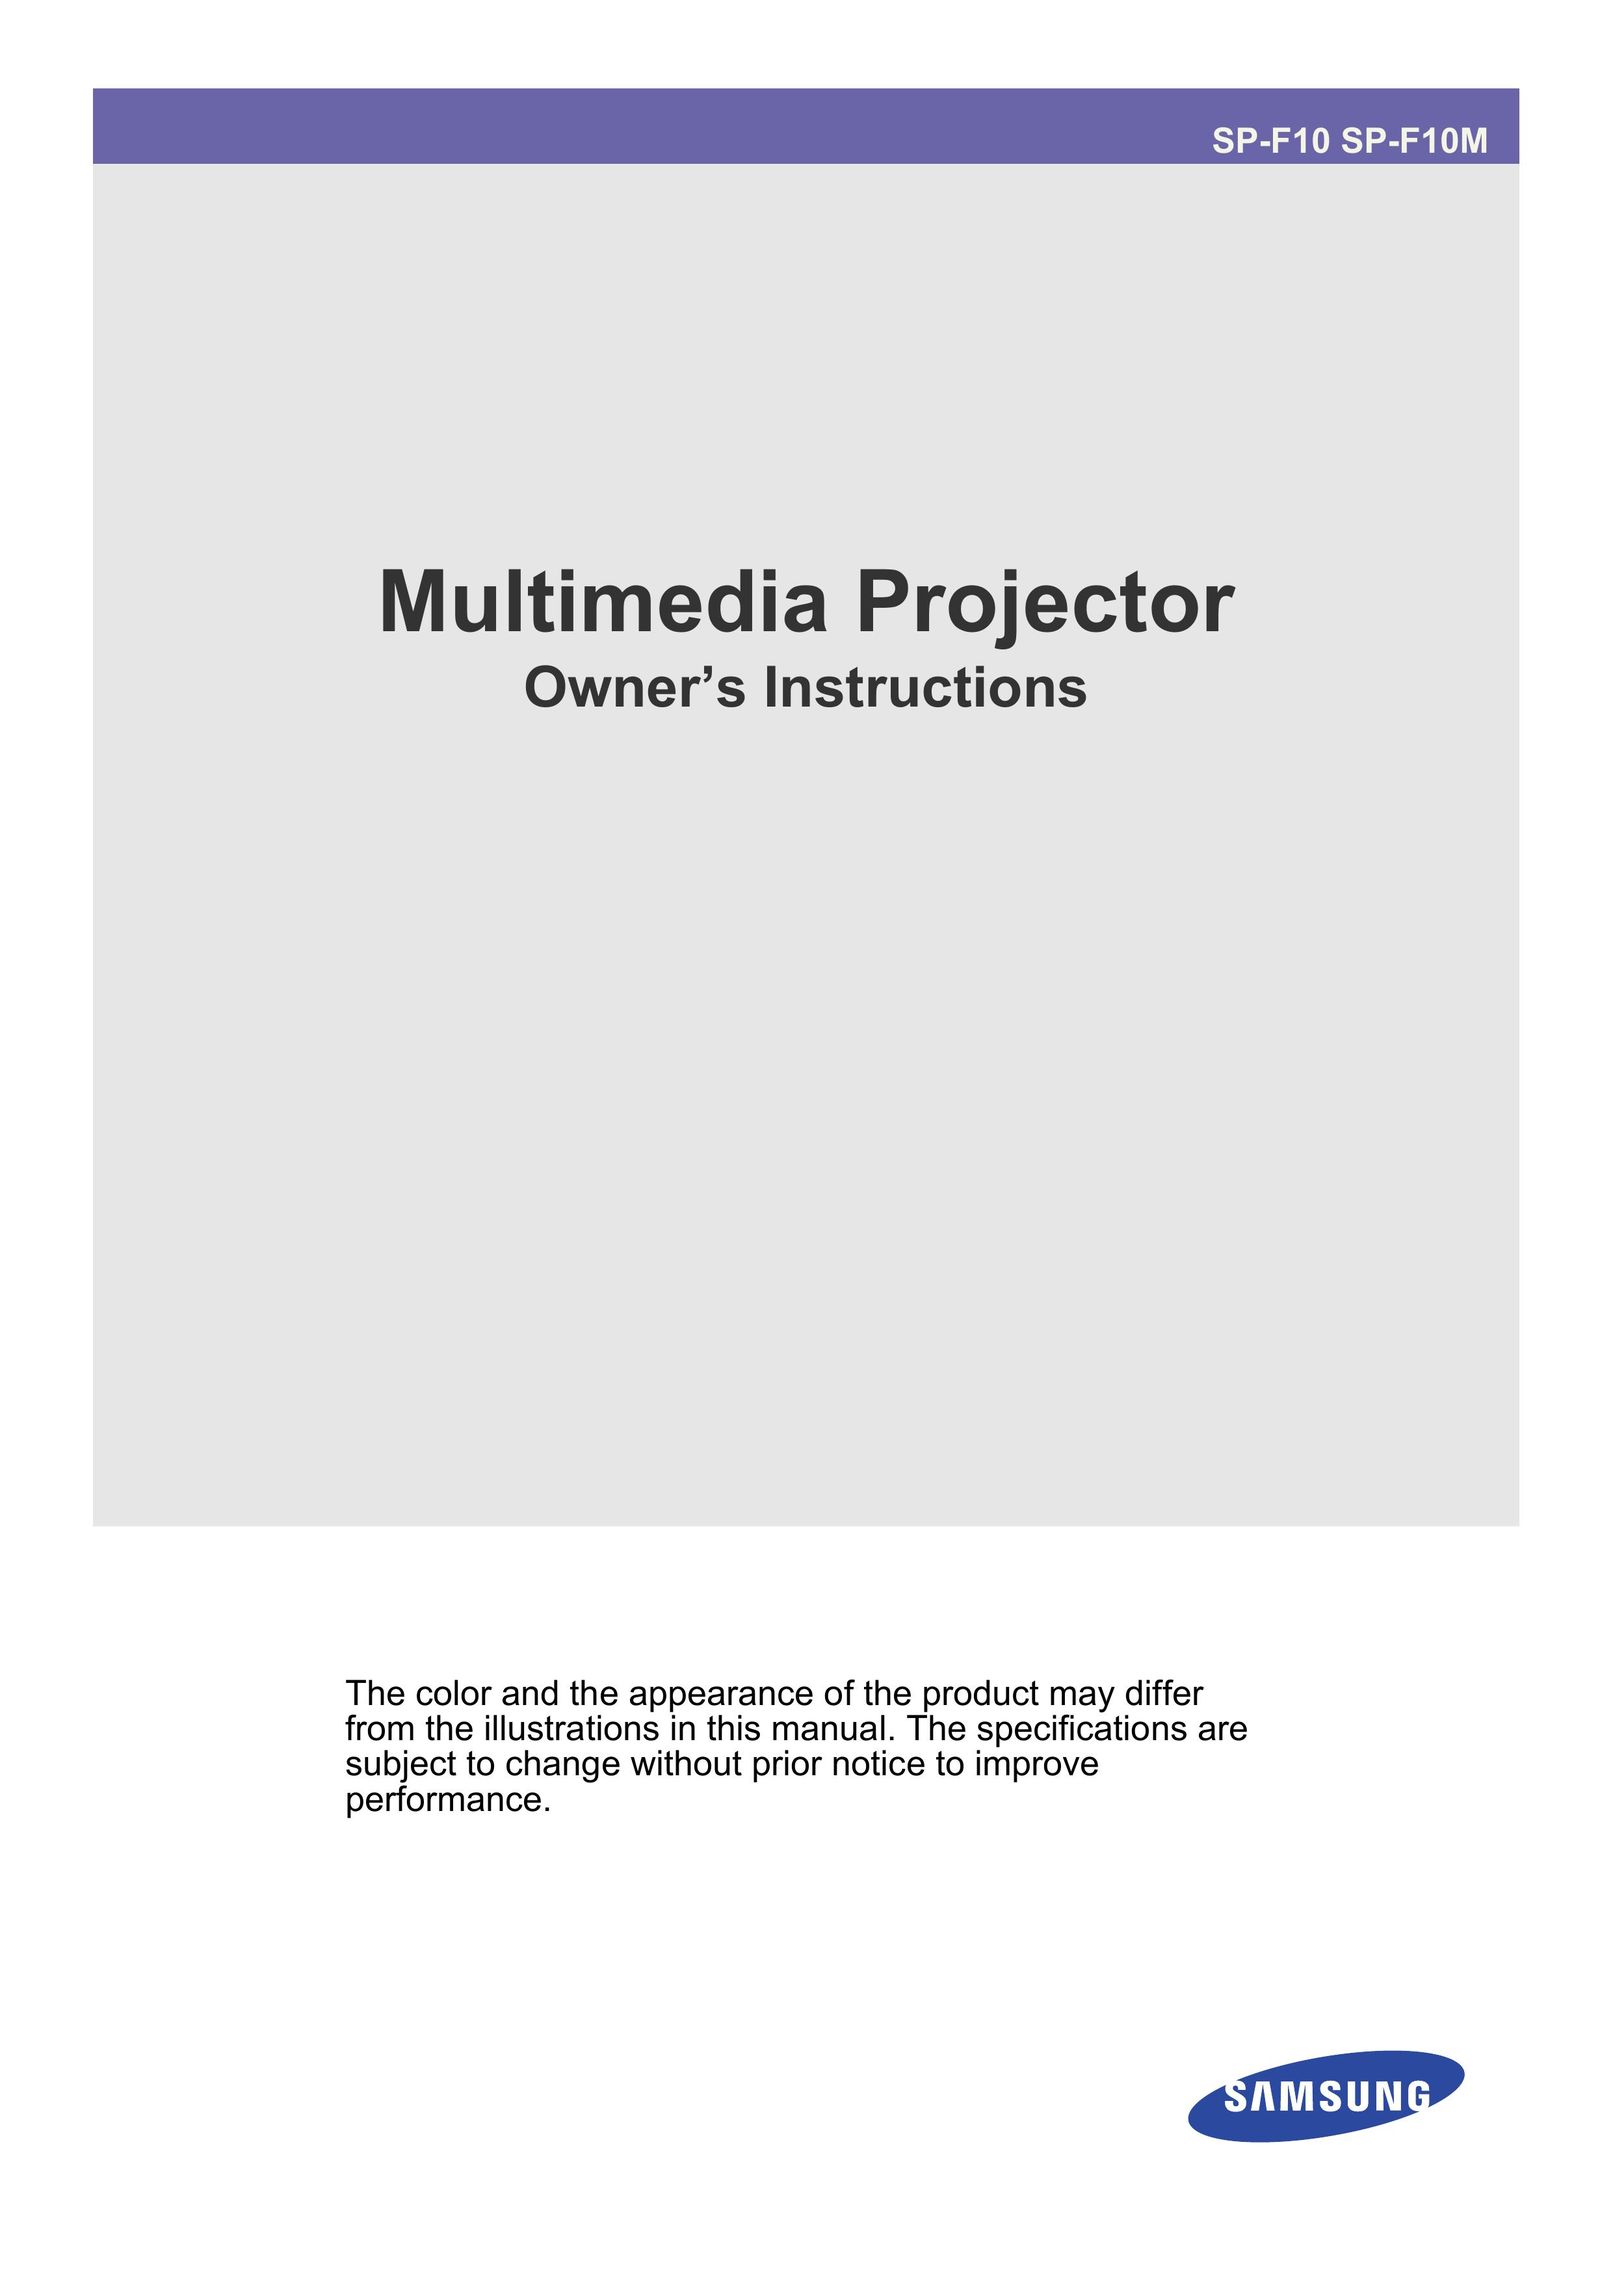 Samsung SP-F10 Projector User Manual